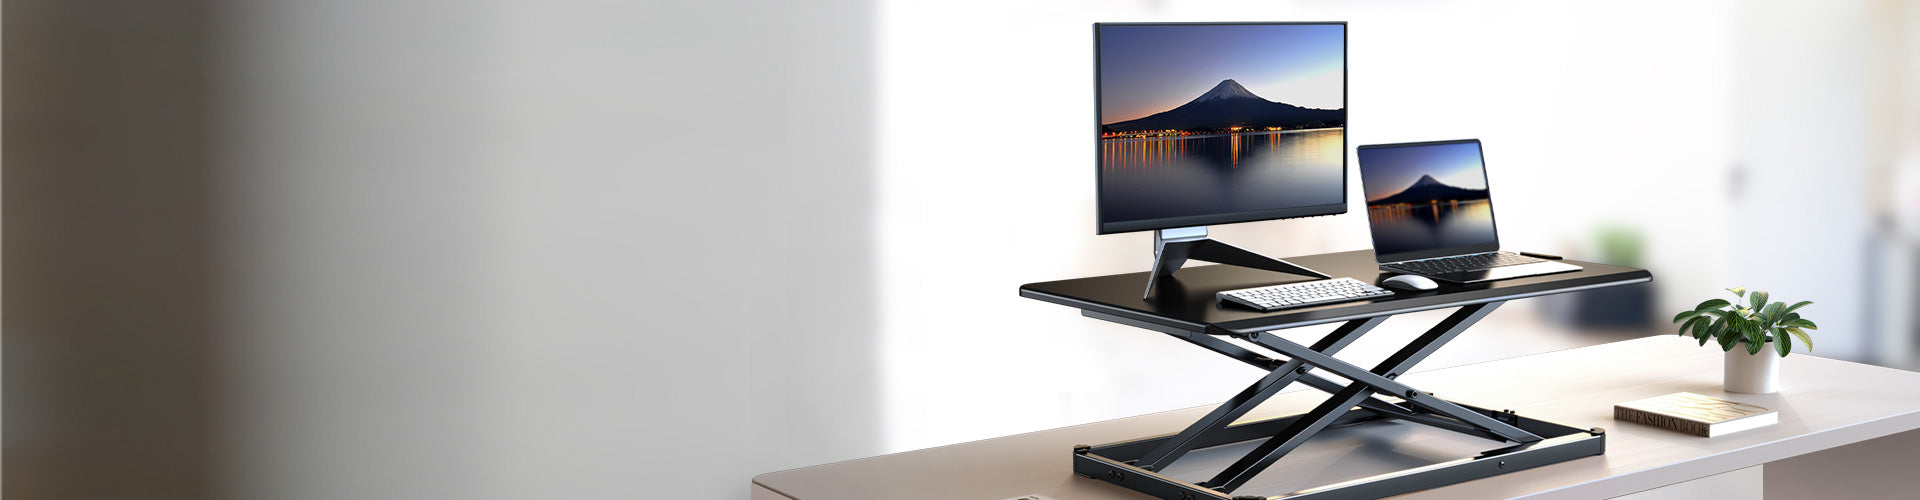 Adjustable Height Standing Desk Systems- v1.0 – ErGear